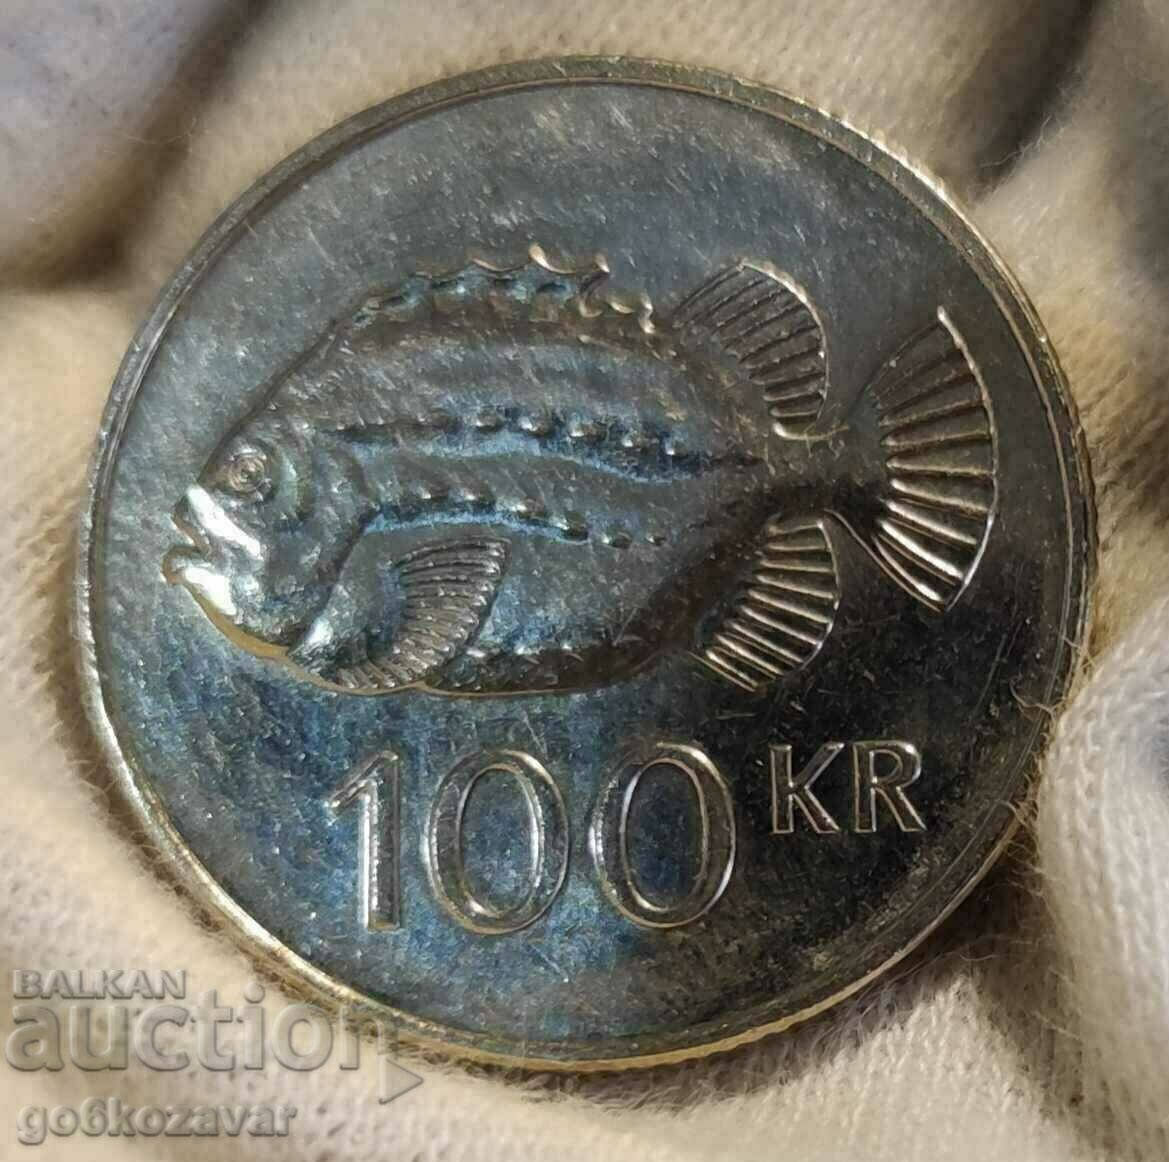 Iceland 100 kroner 2011